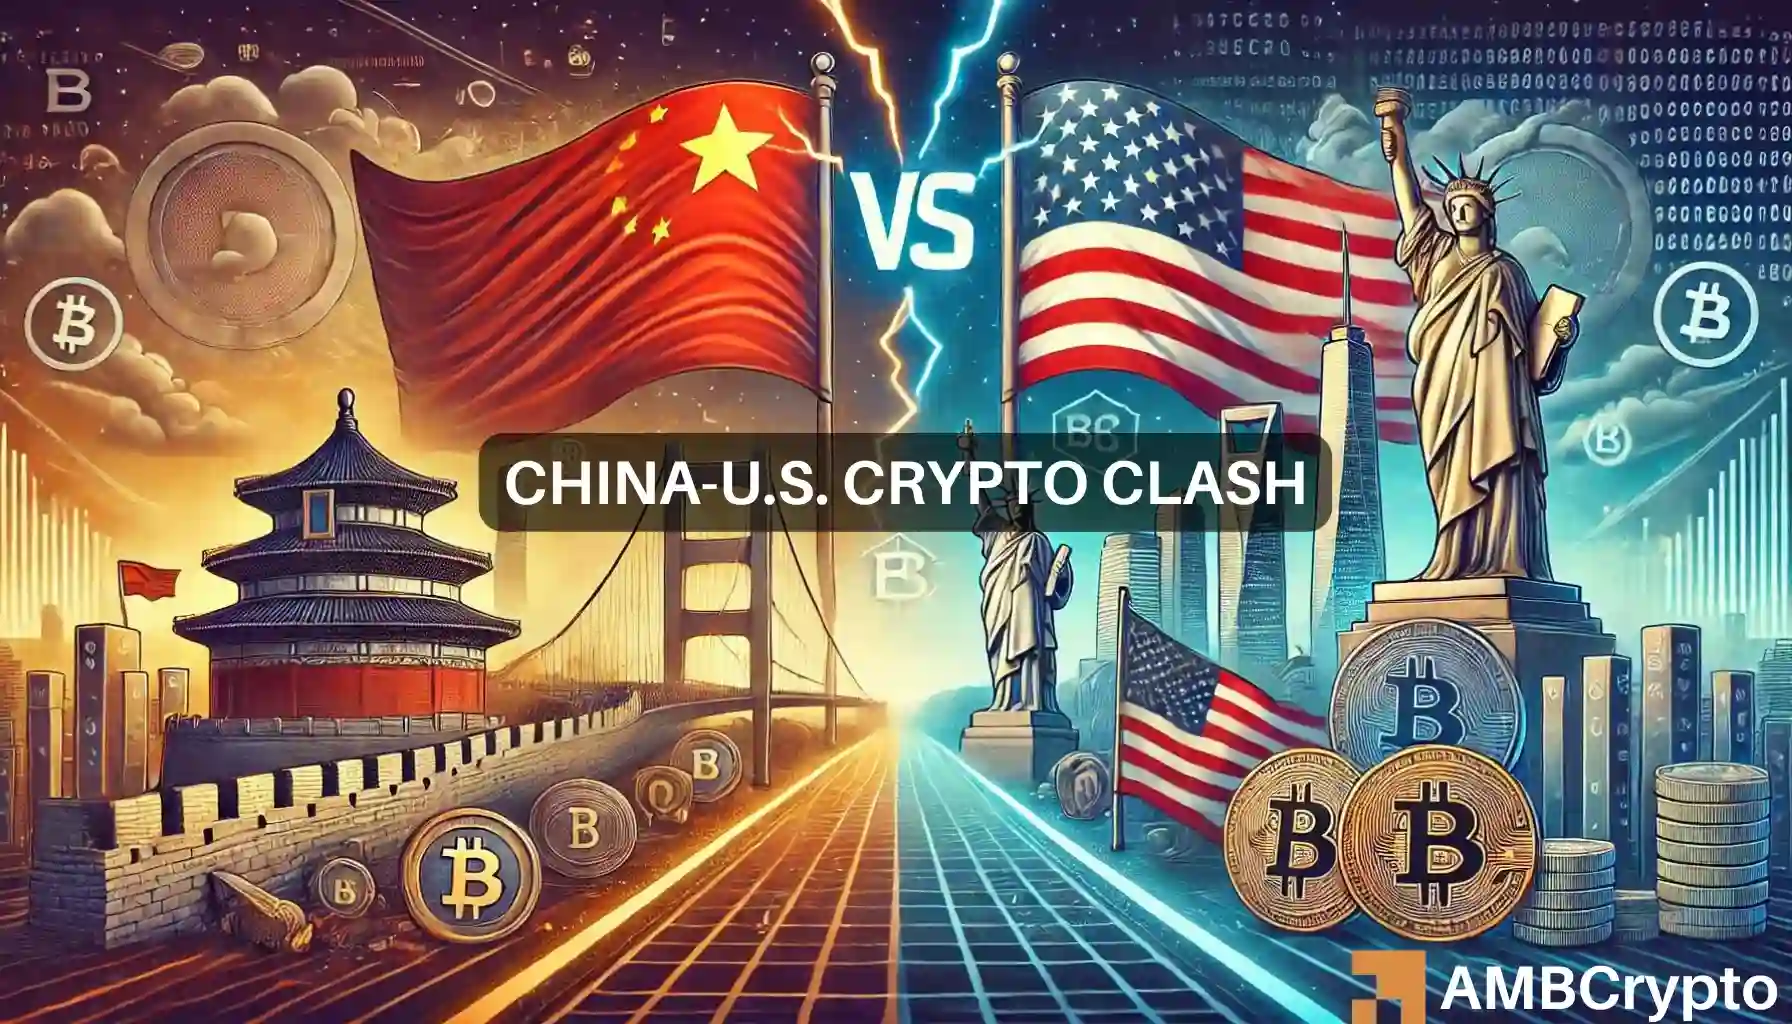 China-U.S. crypto clash